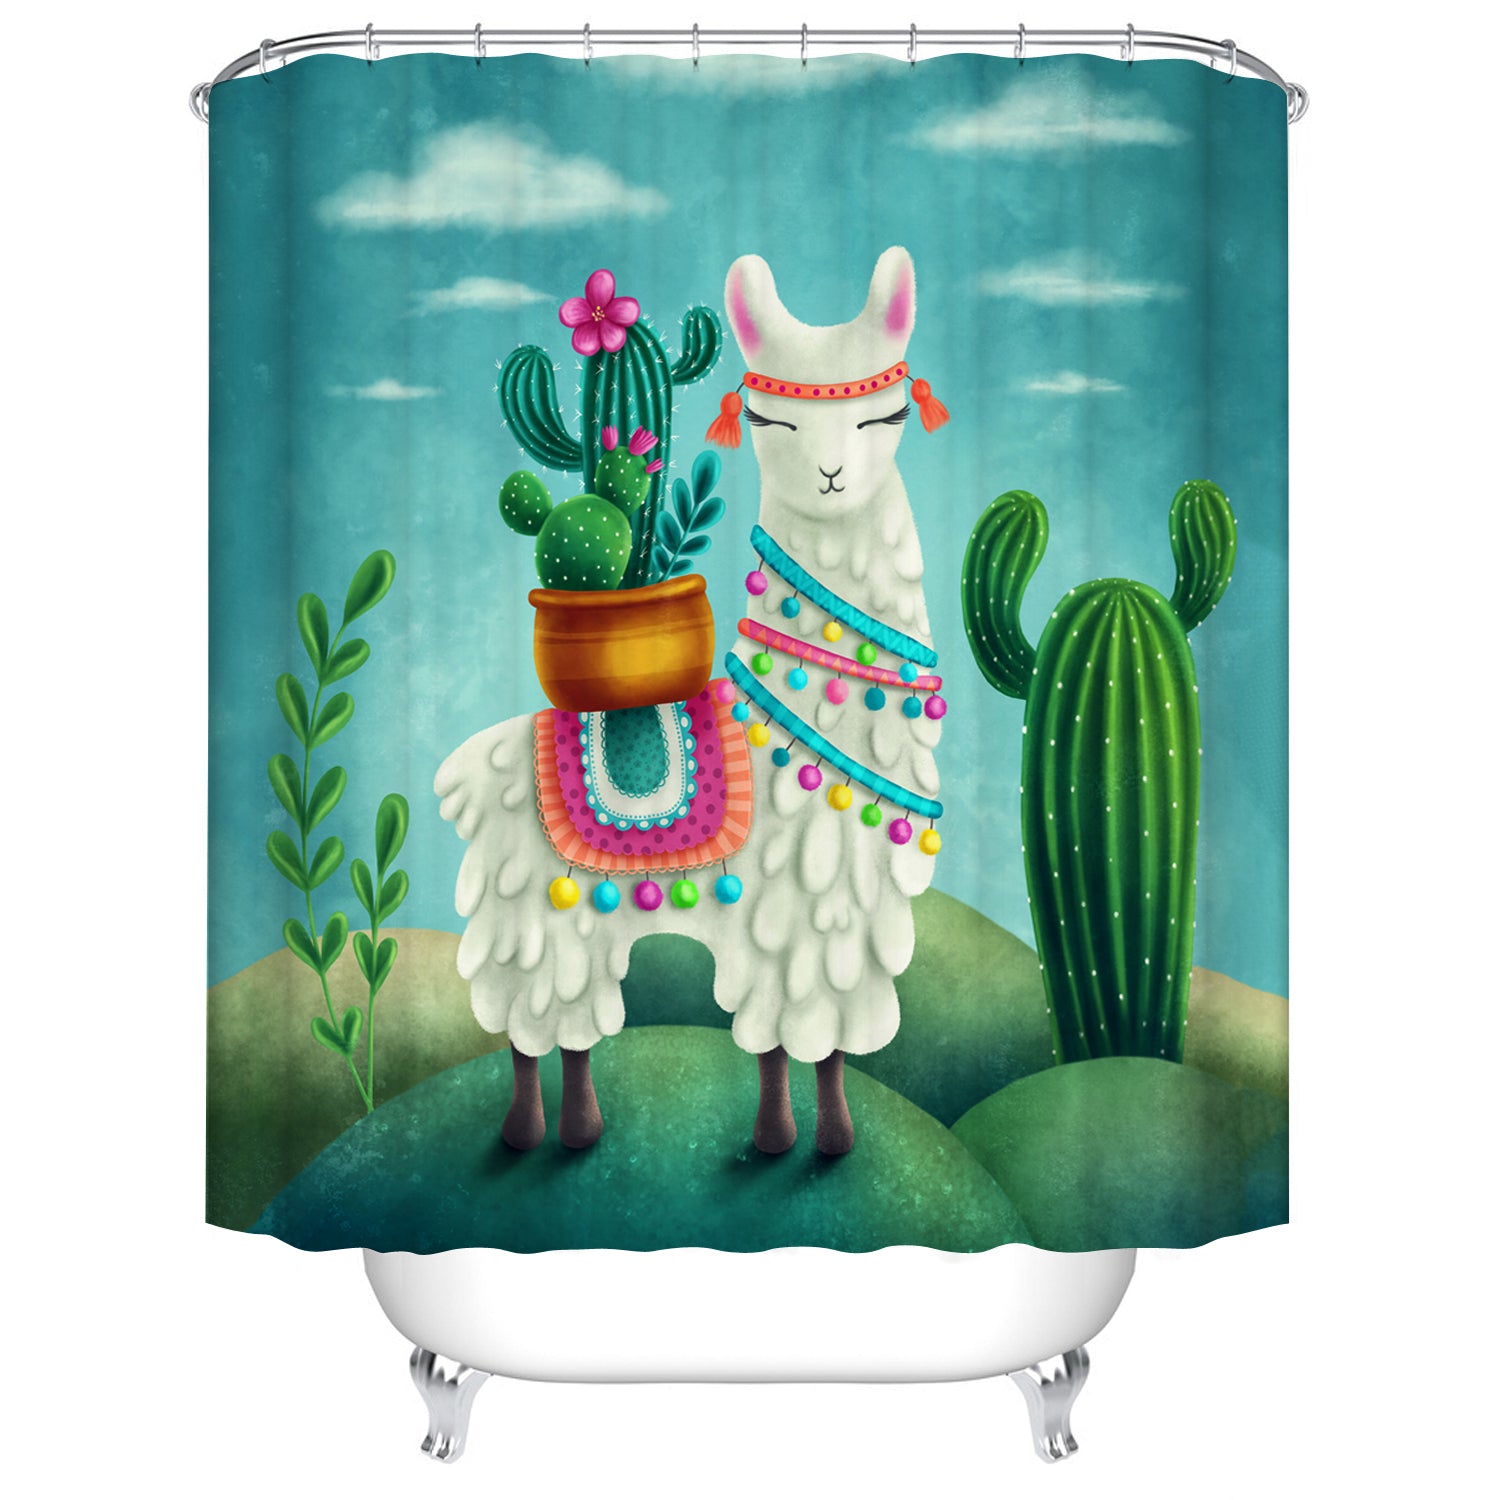 Cartoon Tribal Alpaca Llama Cactus Shower Curtain with Pot of Cactus Plant